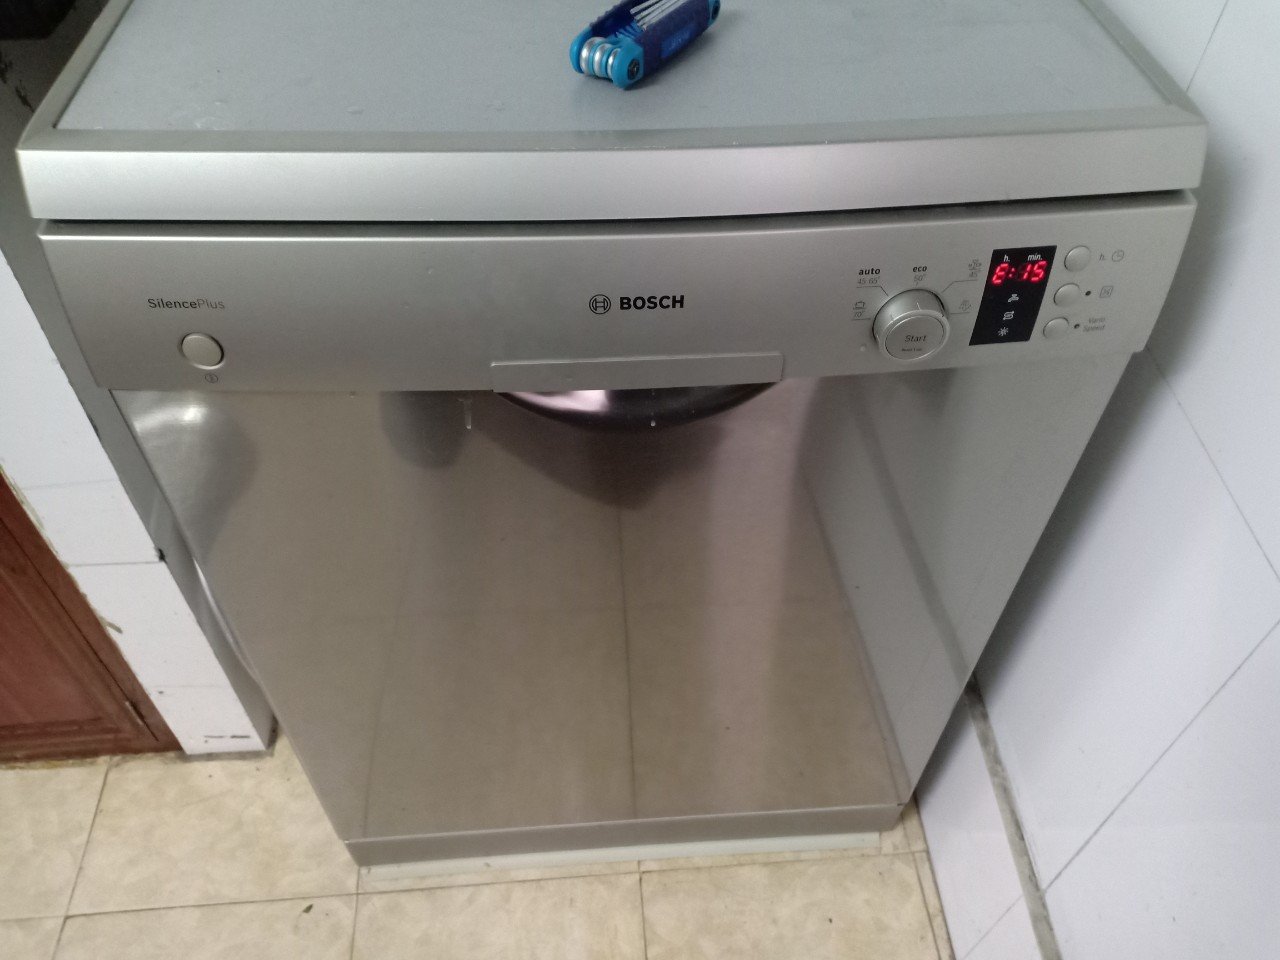 Sửa máy rửa bát Bosch báo lỗi E15